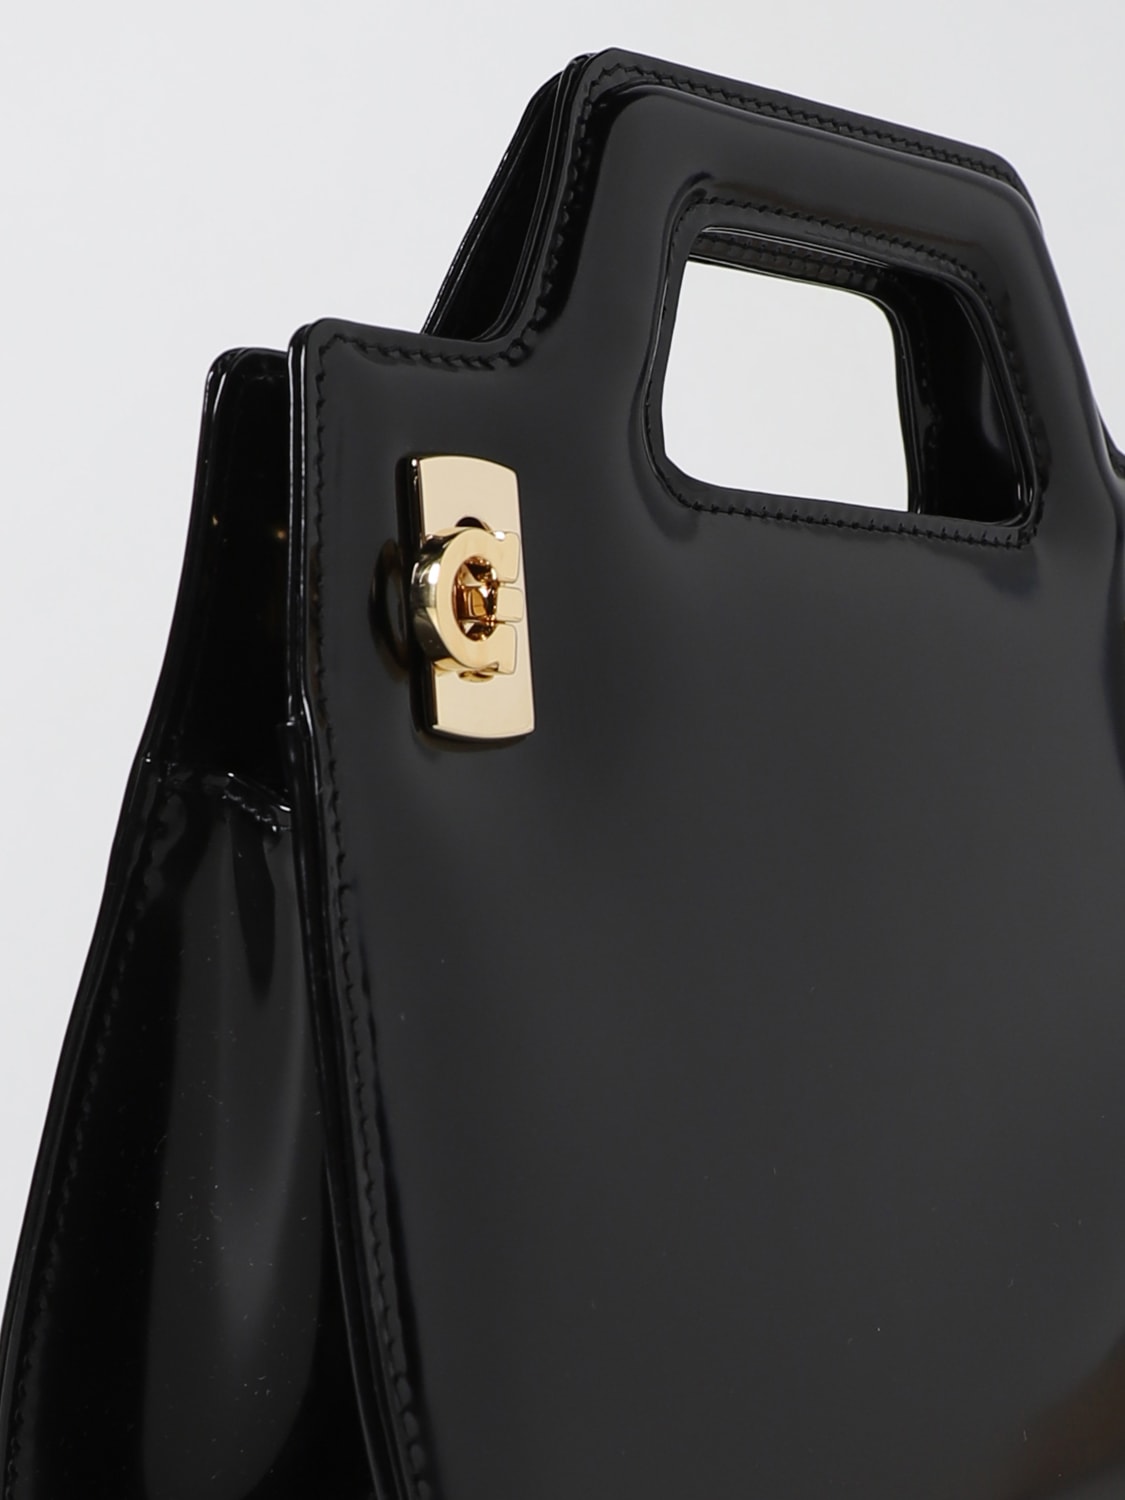 FERRAGAMO: Wanda bag in brushed leather - Black  Ferragamo mini bag 213485  760348 online at